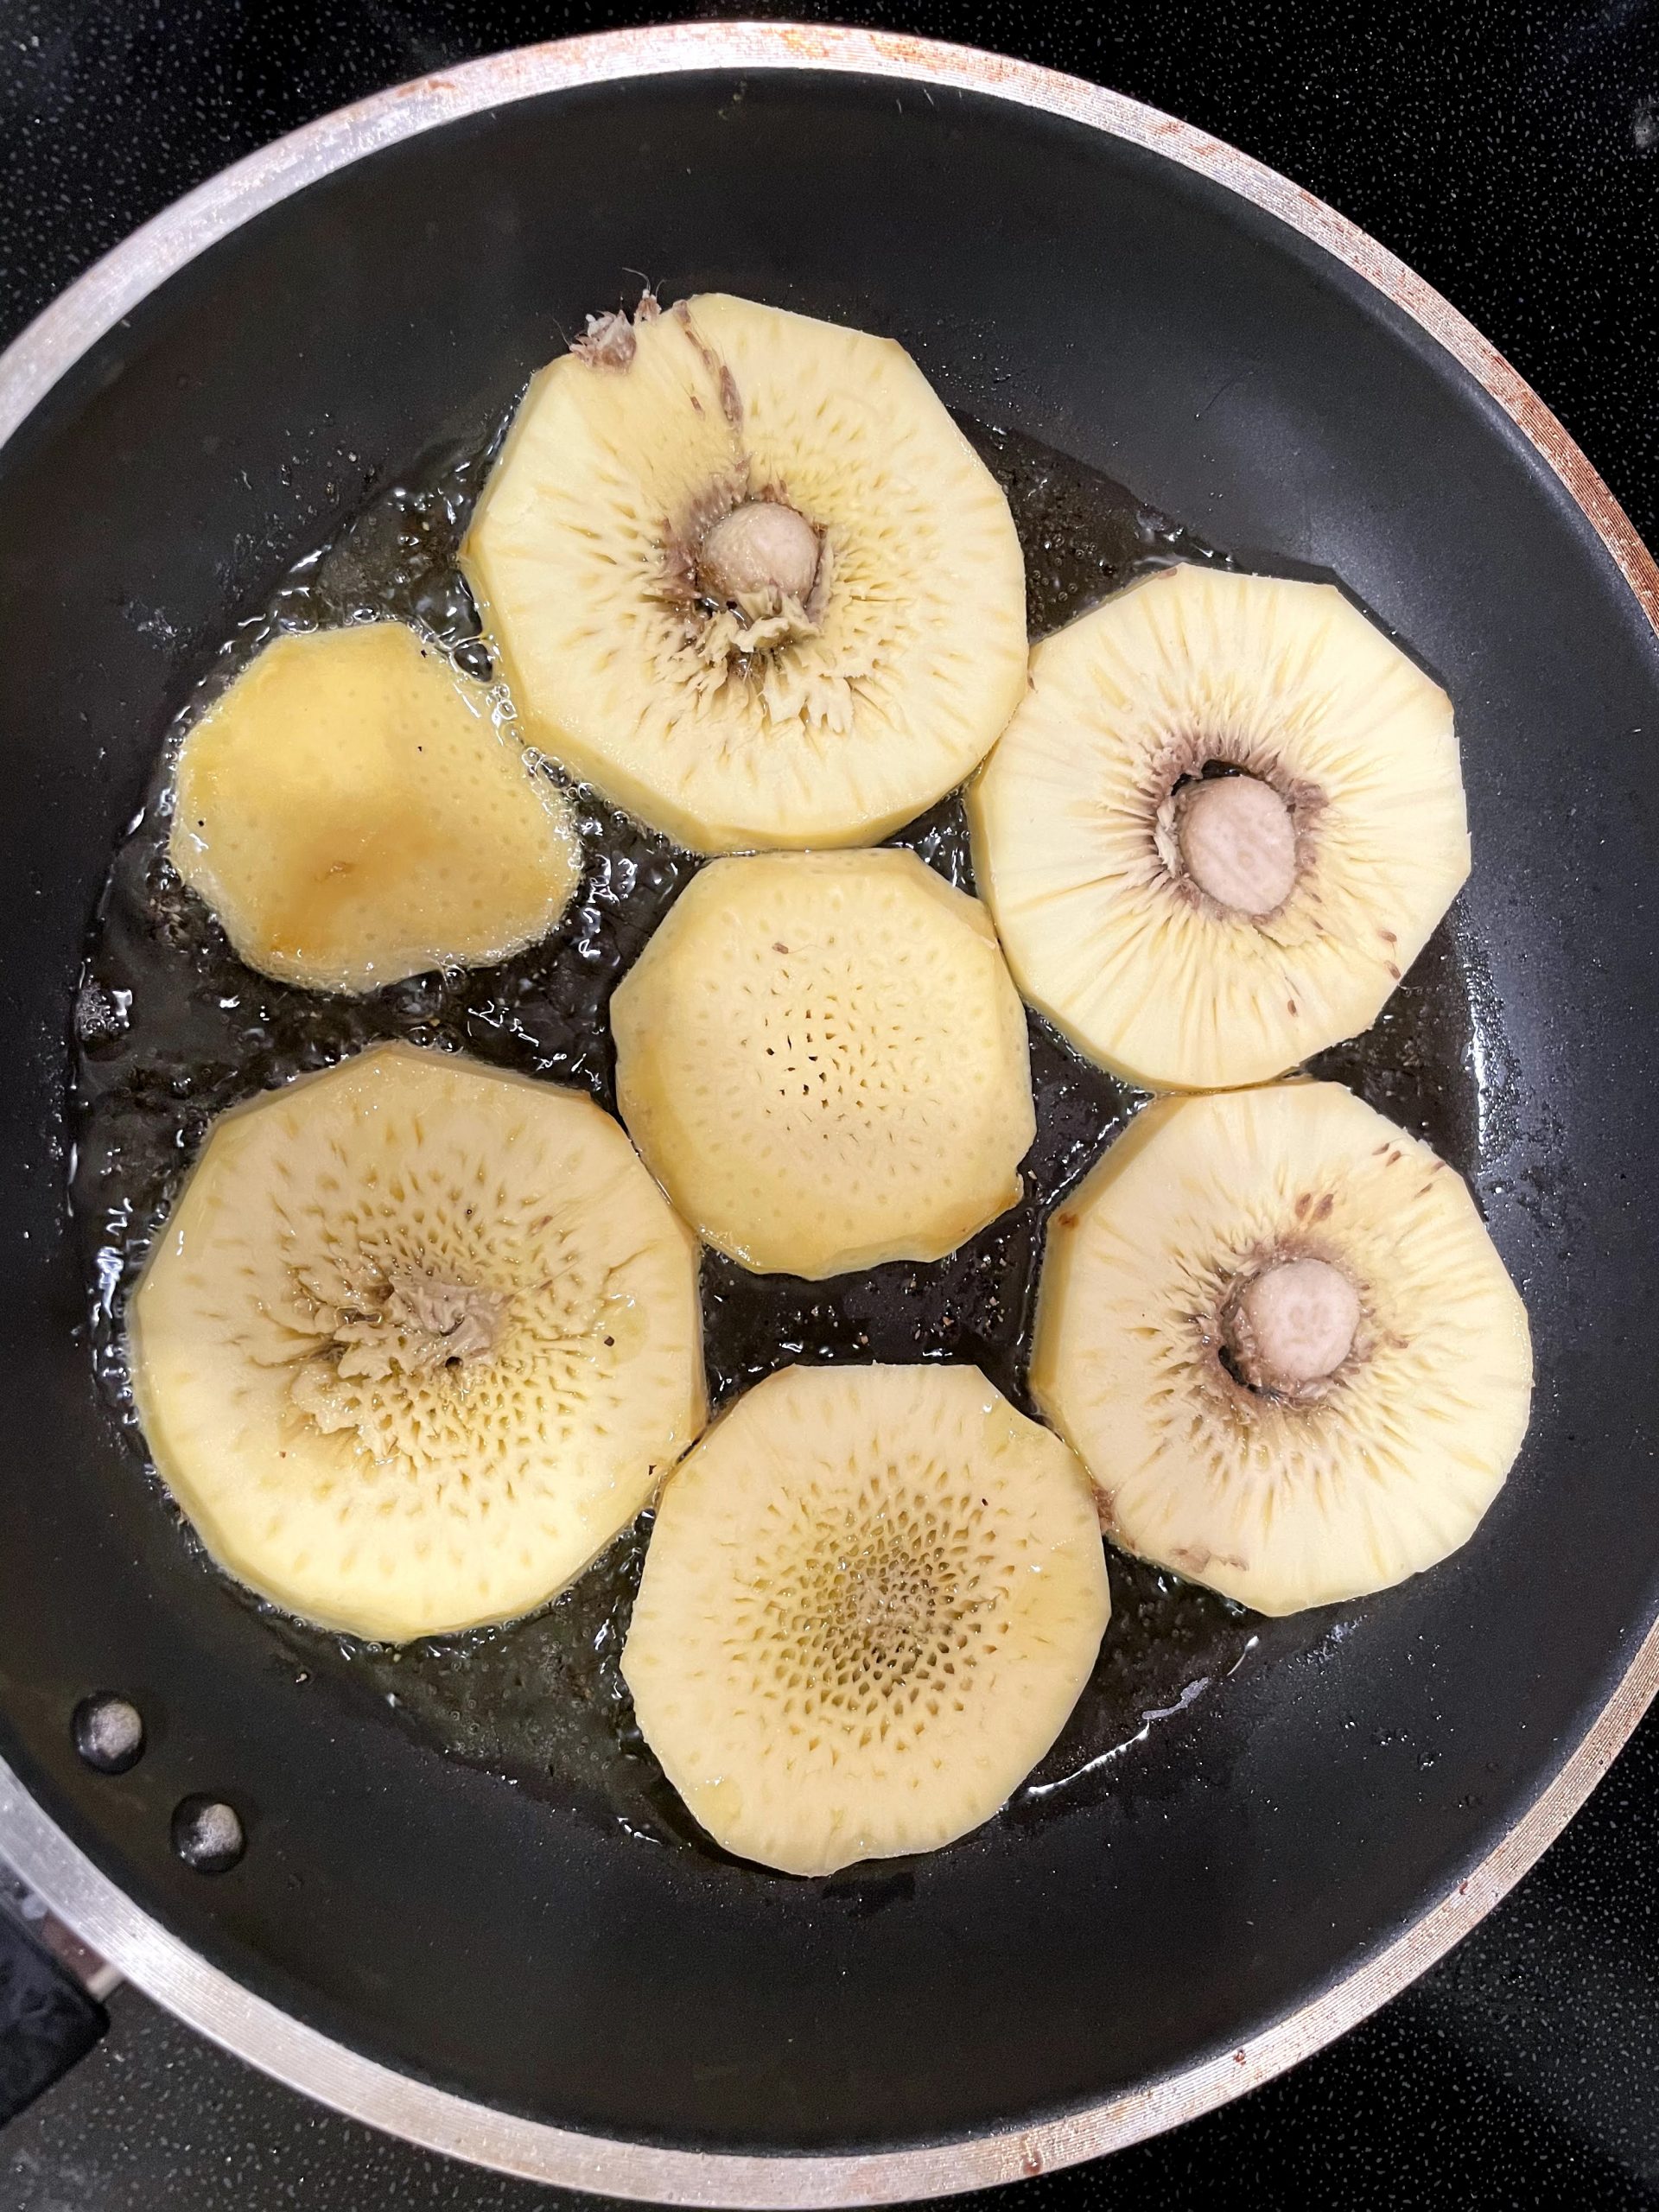 Frying breadfruit